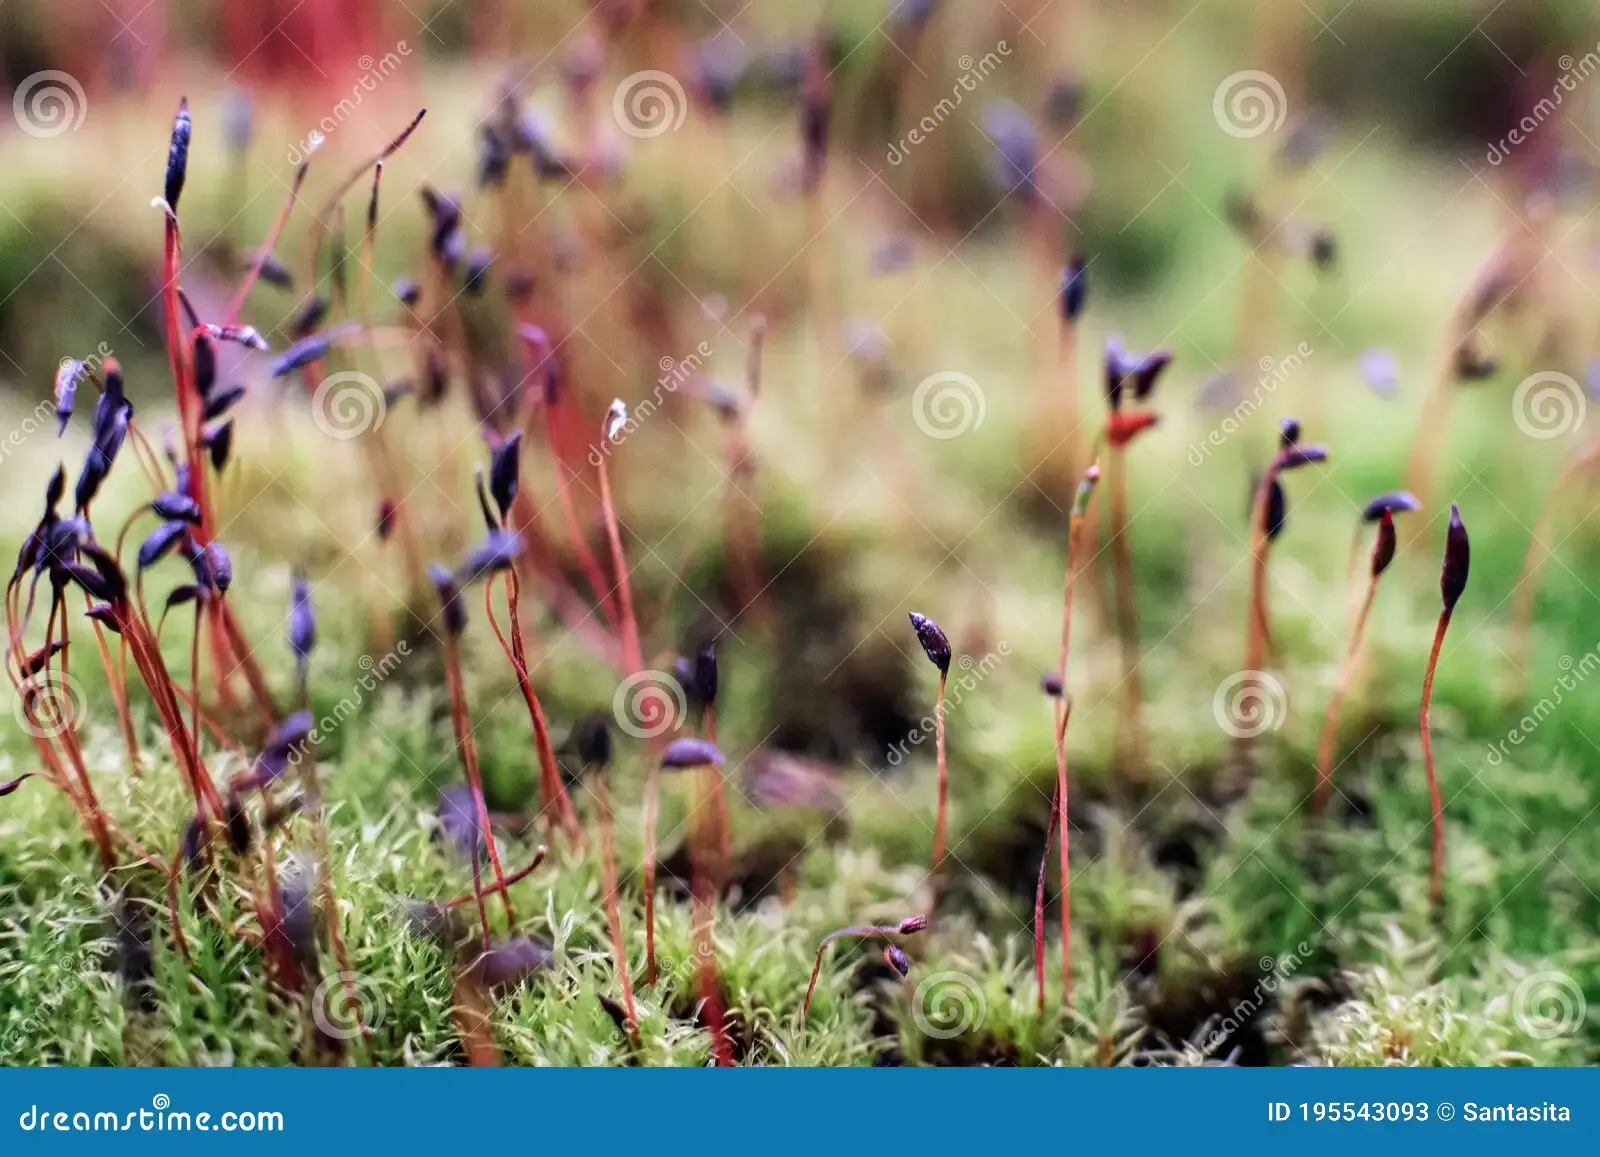 macro-bryum-moss-pohlia-nutans-dew-drops-forest-floor-over-dark-green-background-mossy-plants-mosses-195543093.jpg